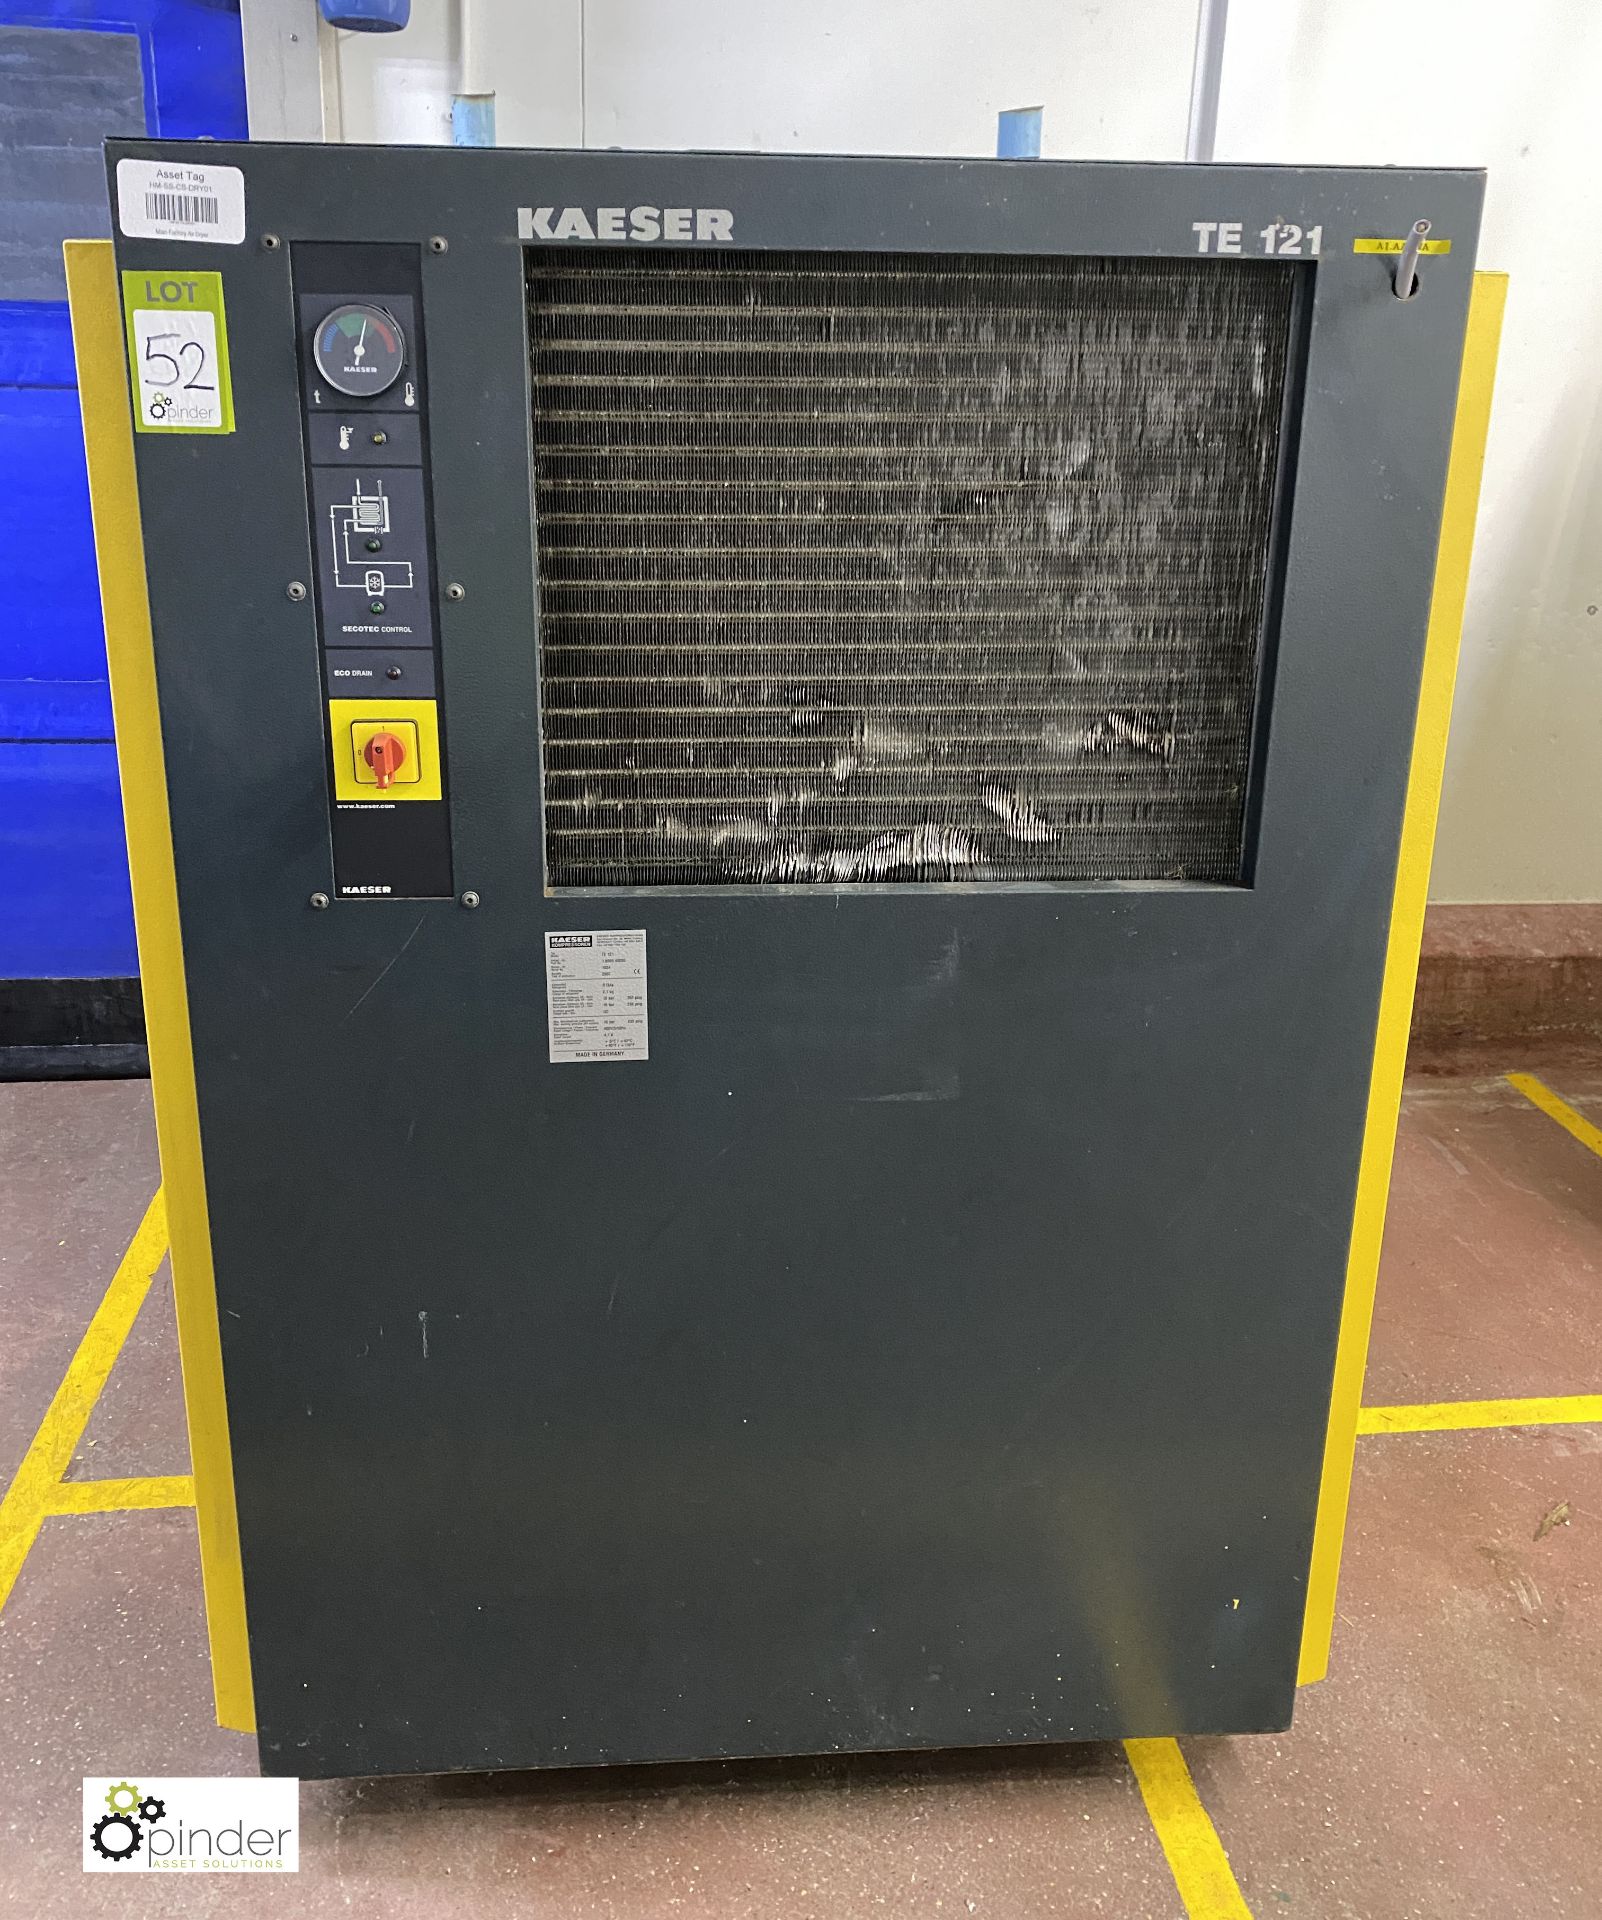 Kaeser TE121 Compressed Air Dryer, working pressure 16bar, year 2007, serial number 1034 ( - Image 2 of 5